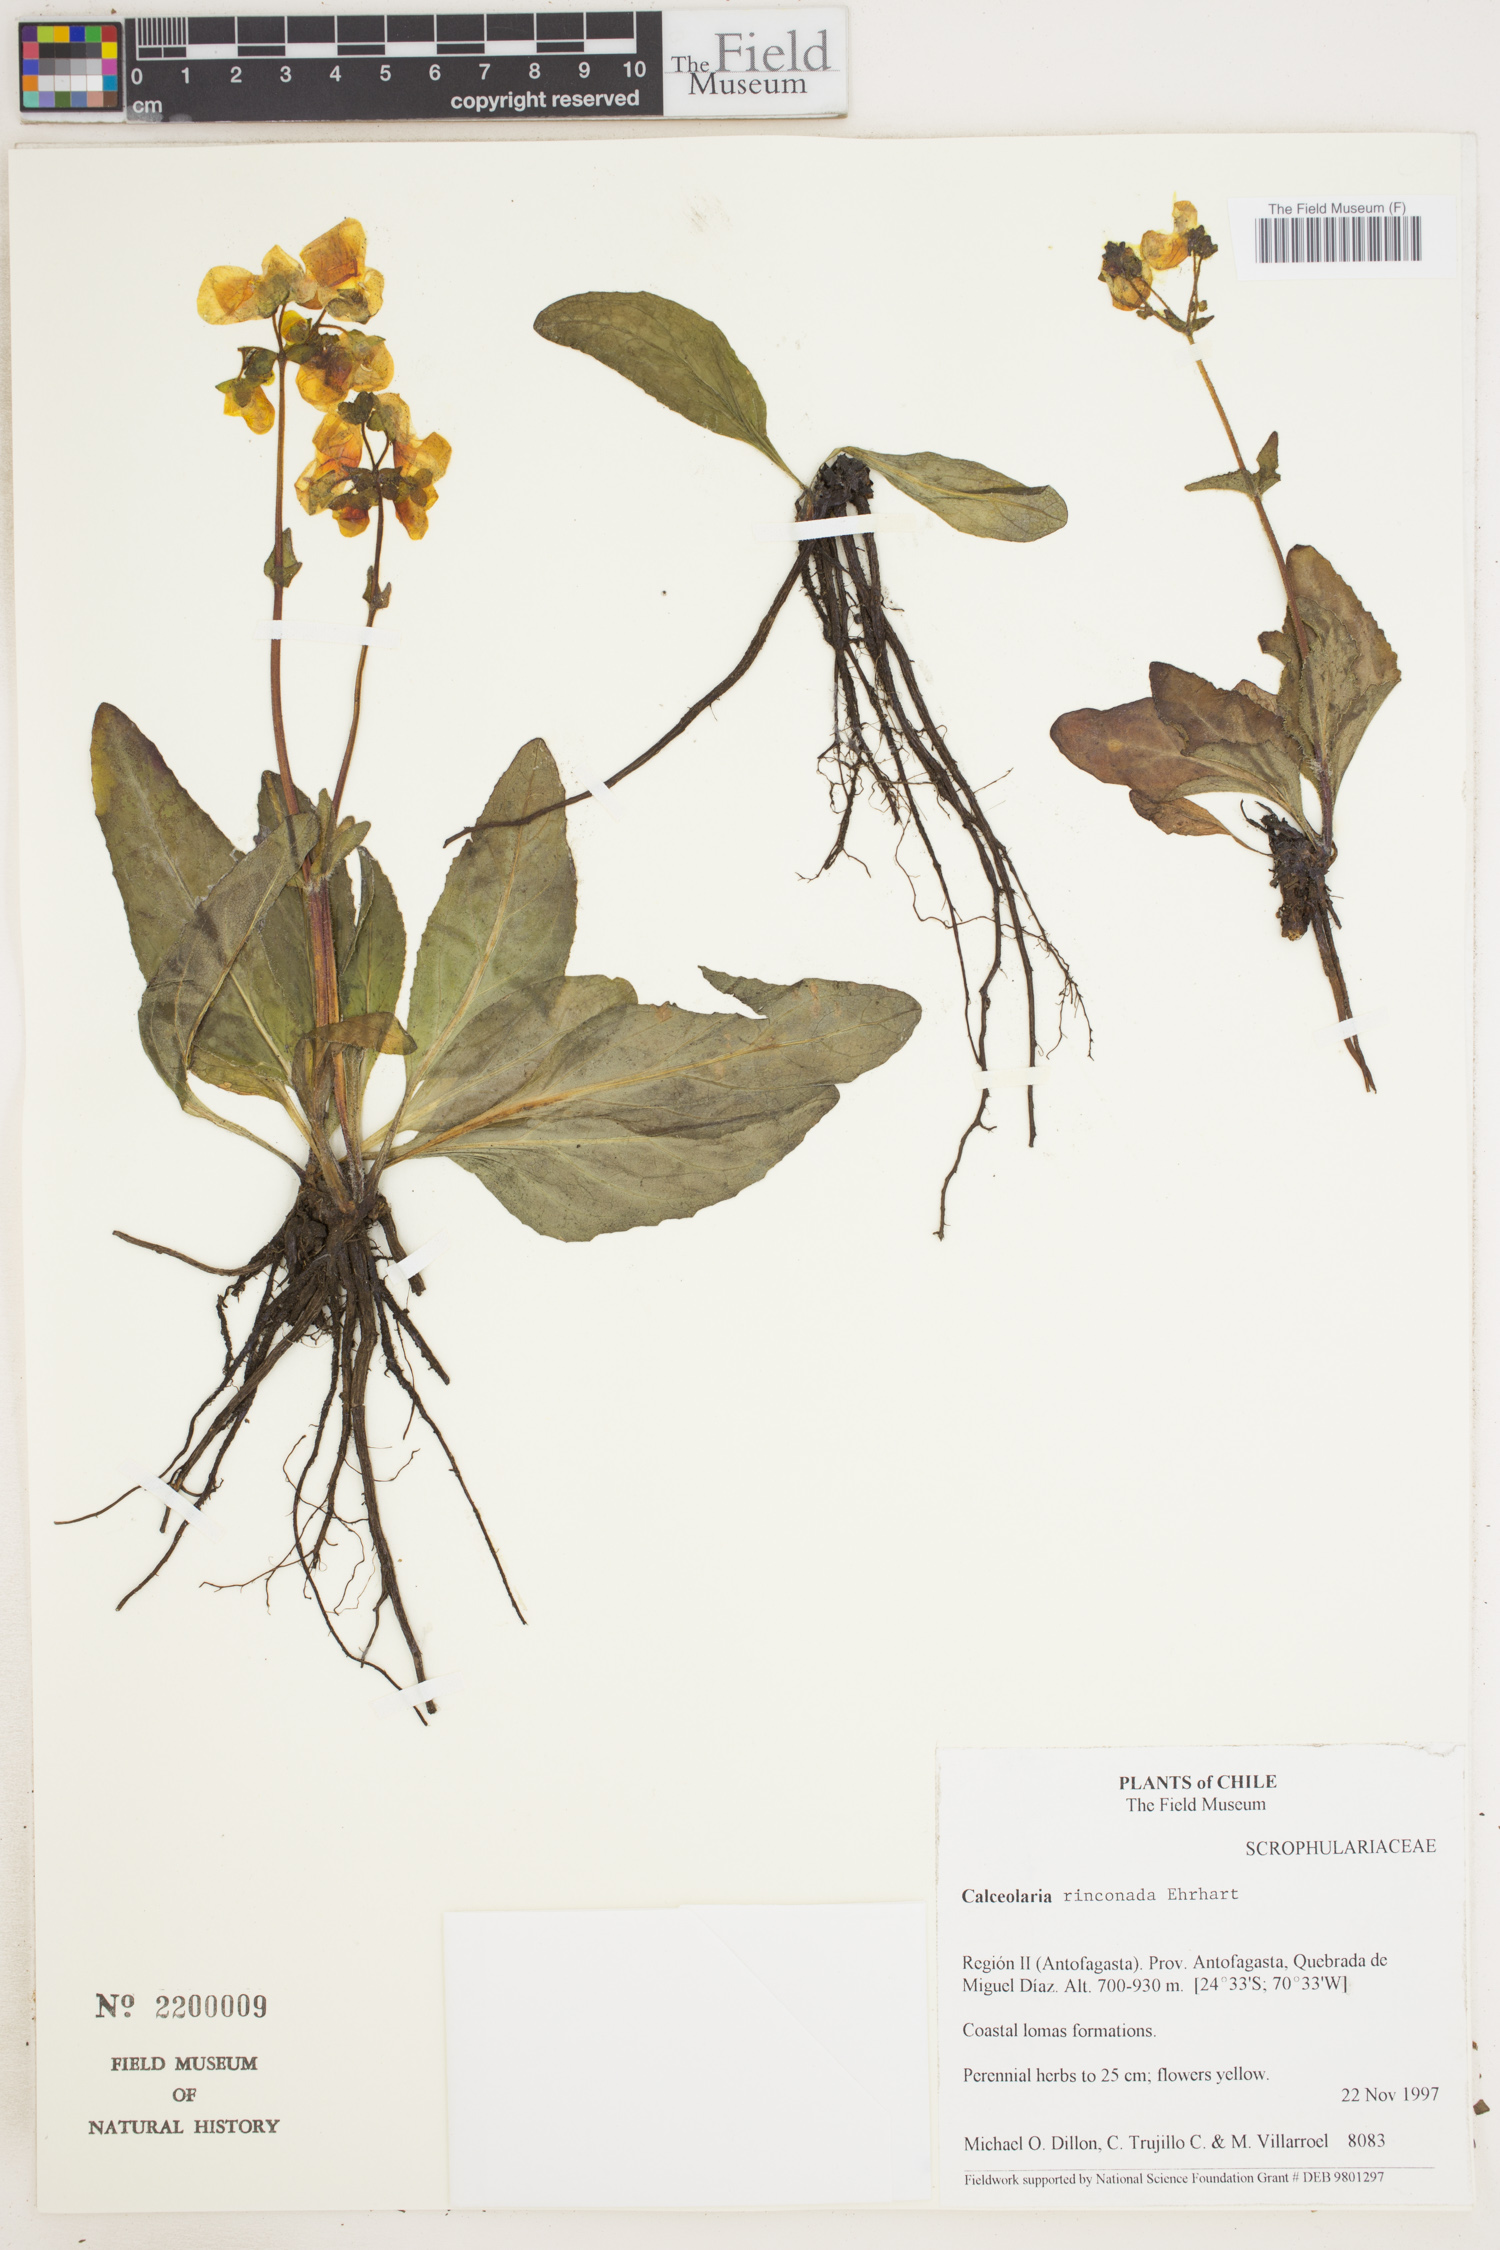 Calceolaria rinconada image